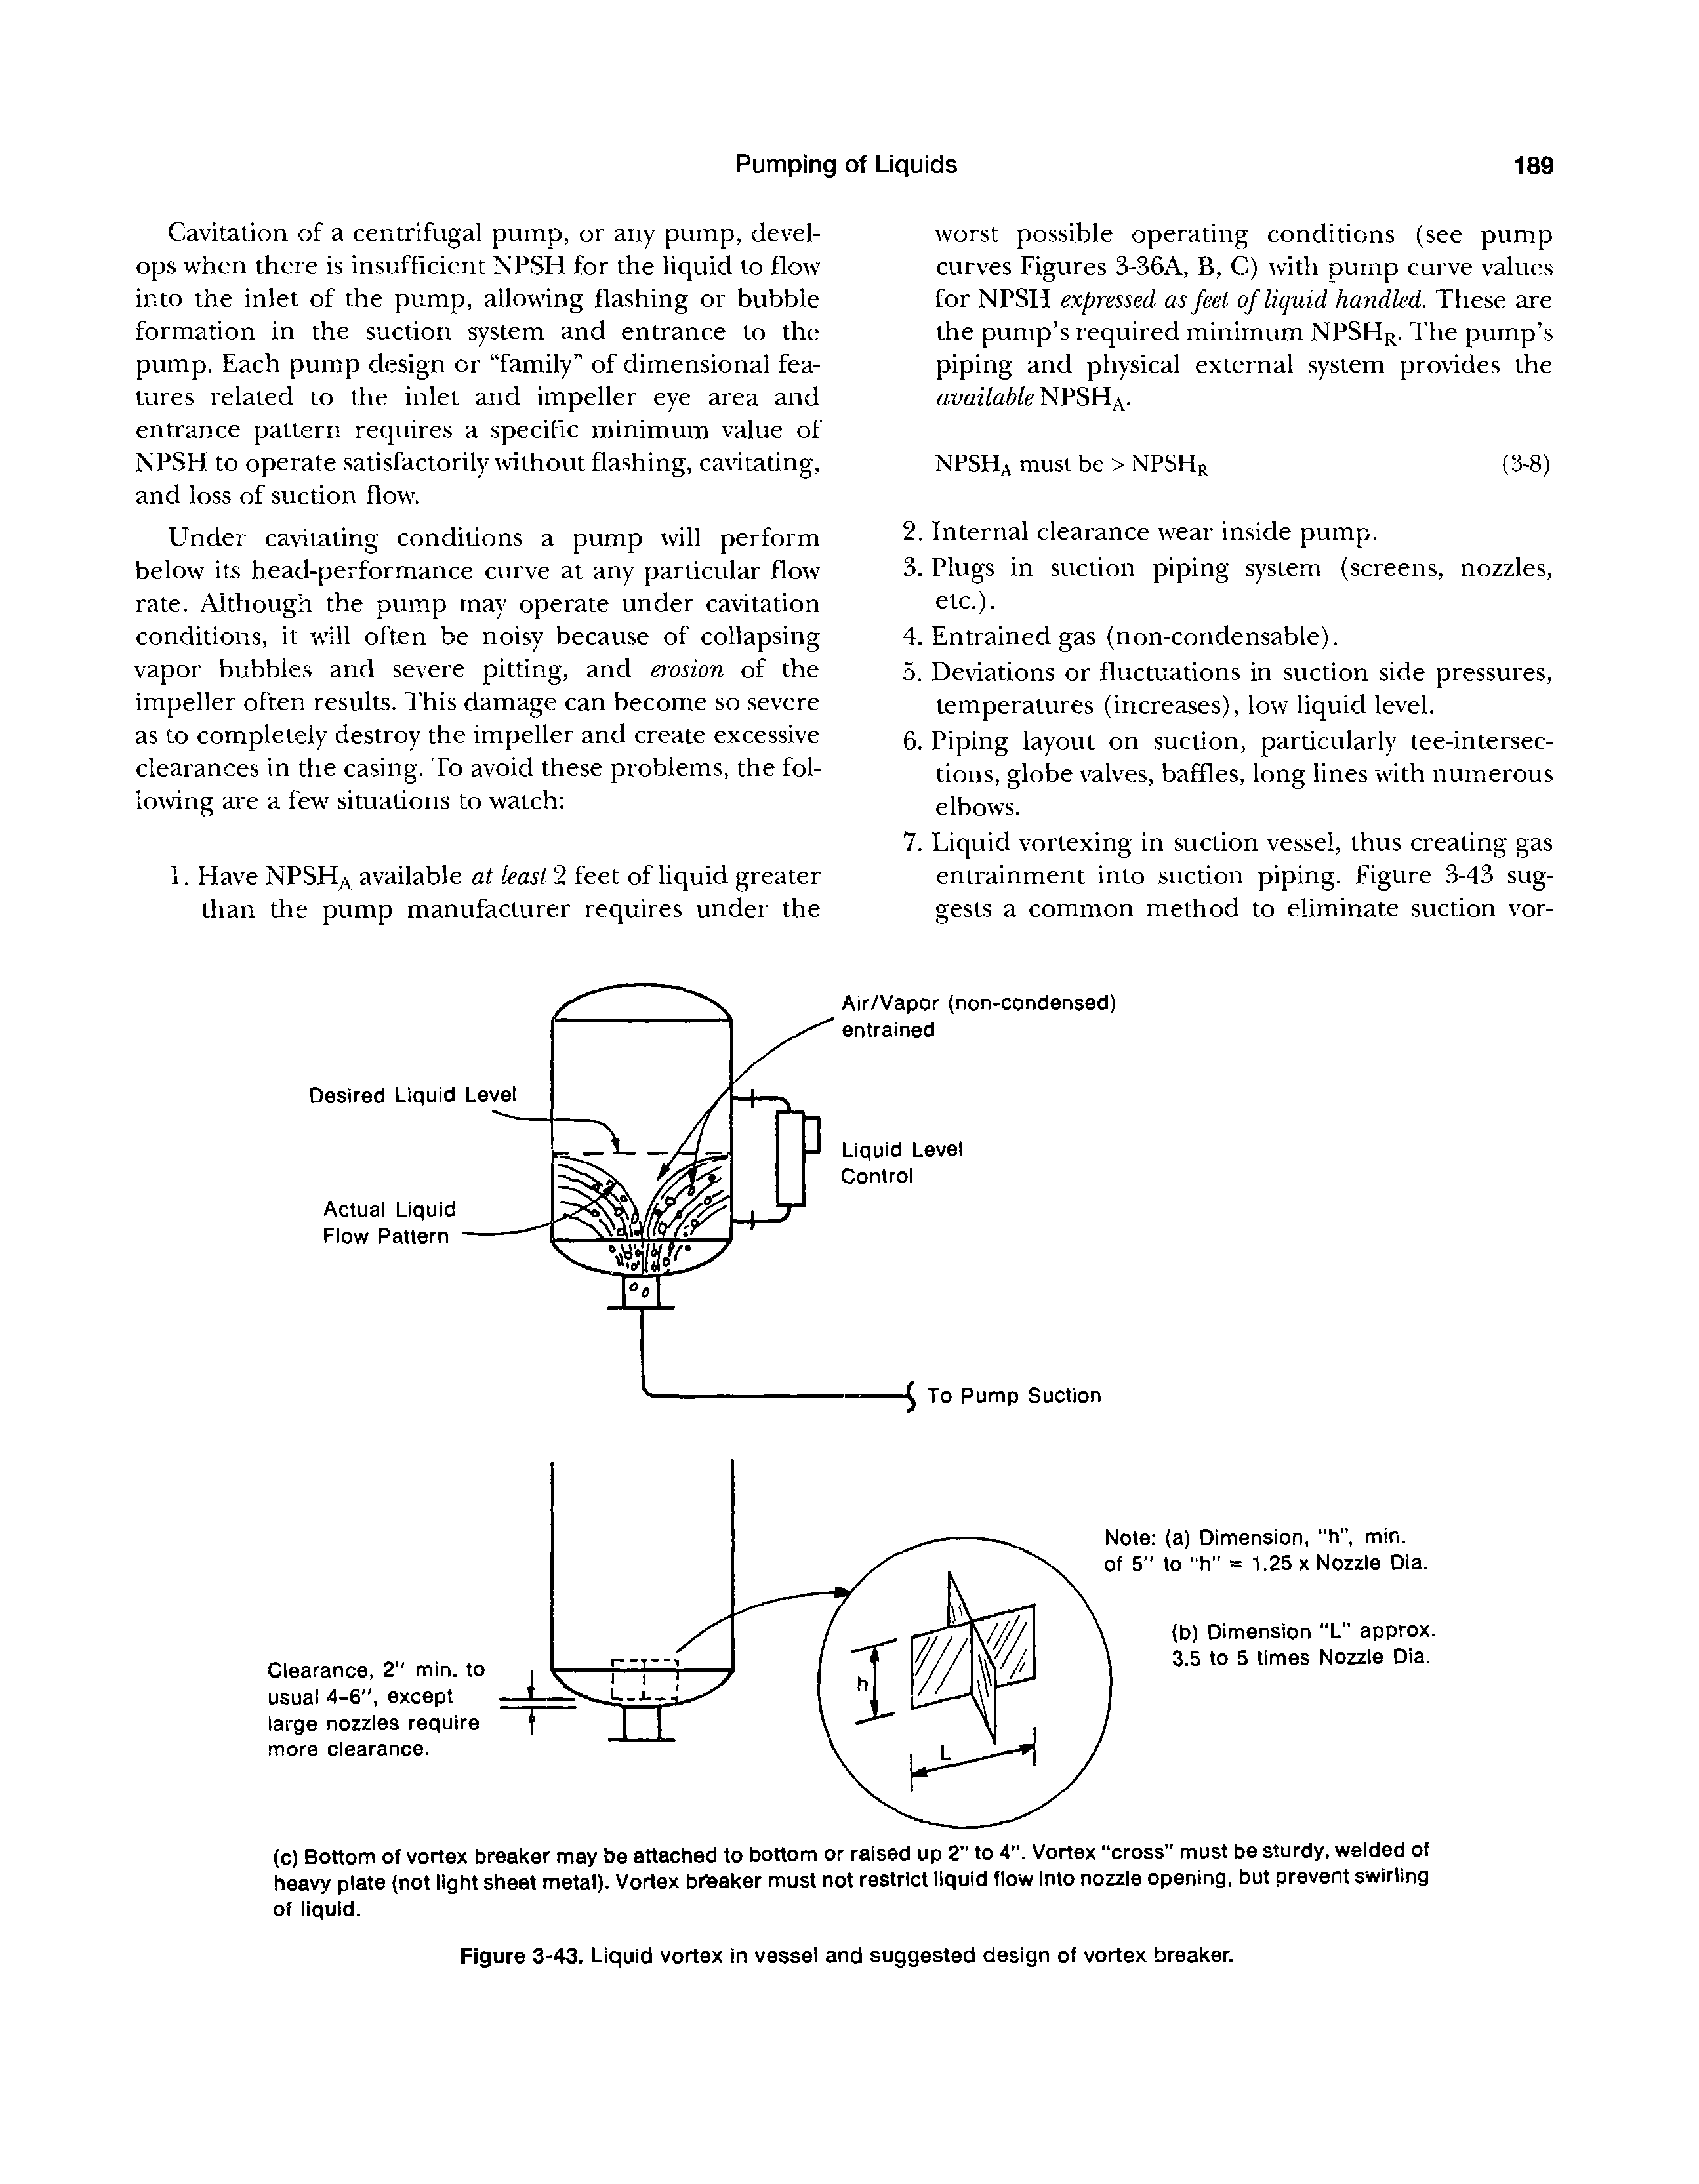 Figure 3-43. Liquid vortex in vessel and suggested design of vortex breaker.